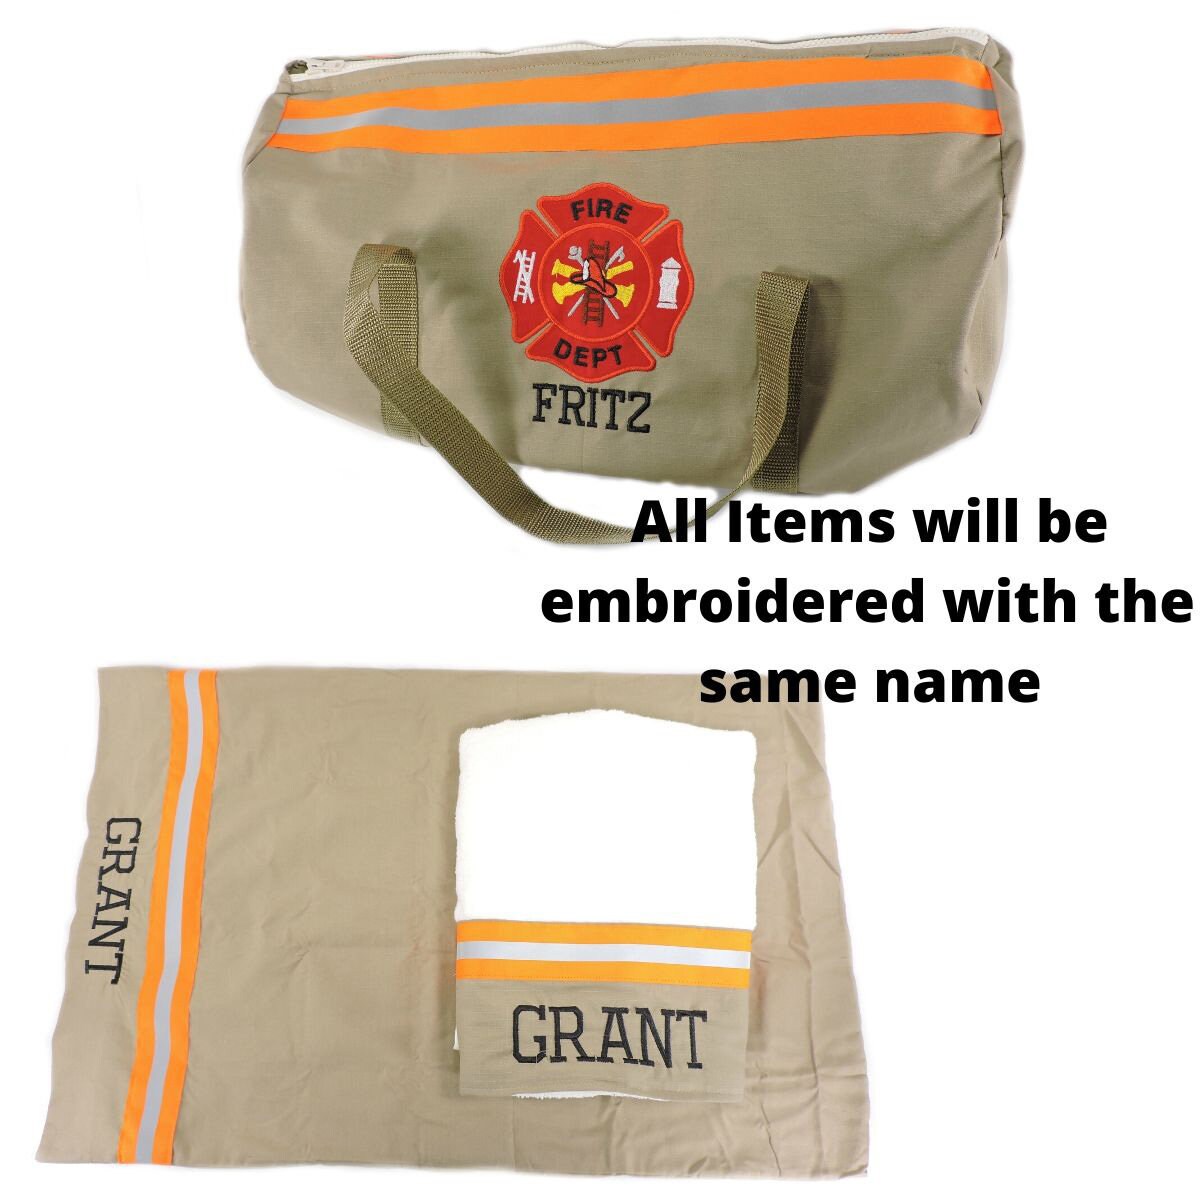 tan fabric neon orange tape Firefighter Duffel bag, pillowcase and bath towel gift set